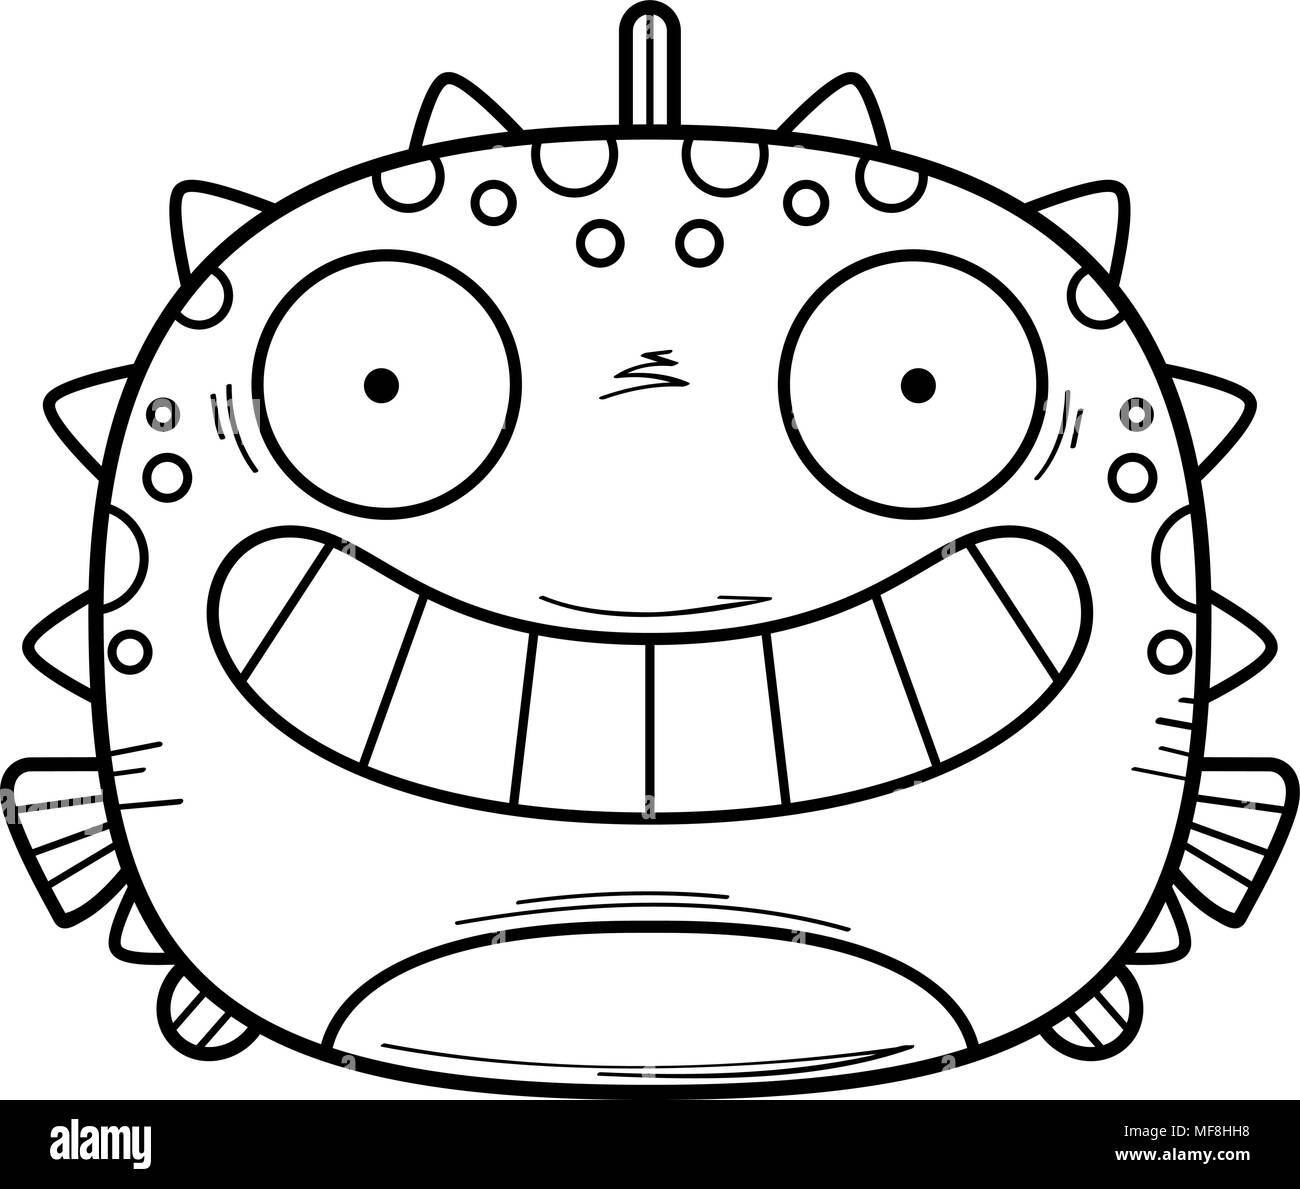 A cartoon illustration of a blowfish looking happy. Stock Vector